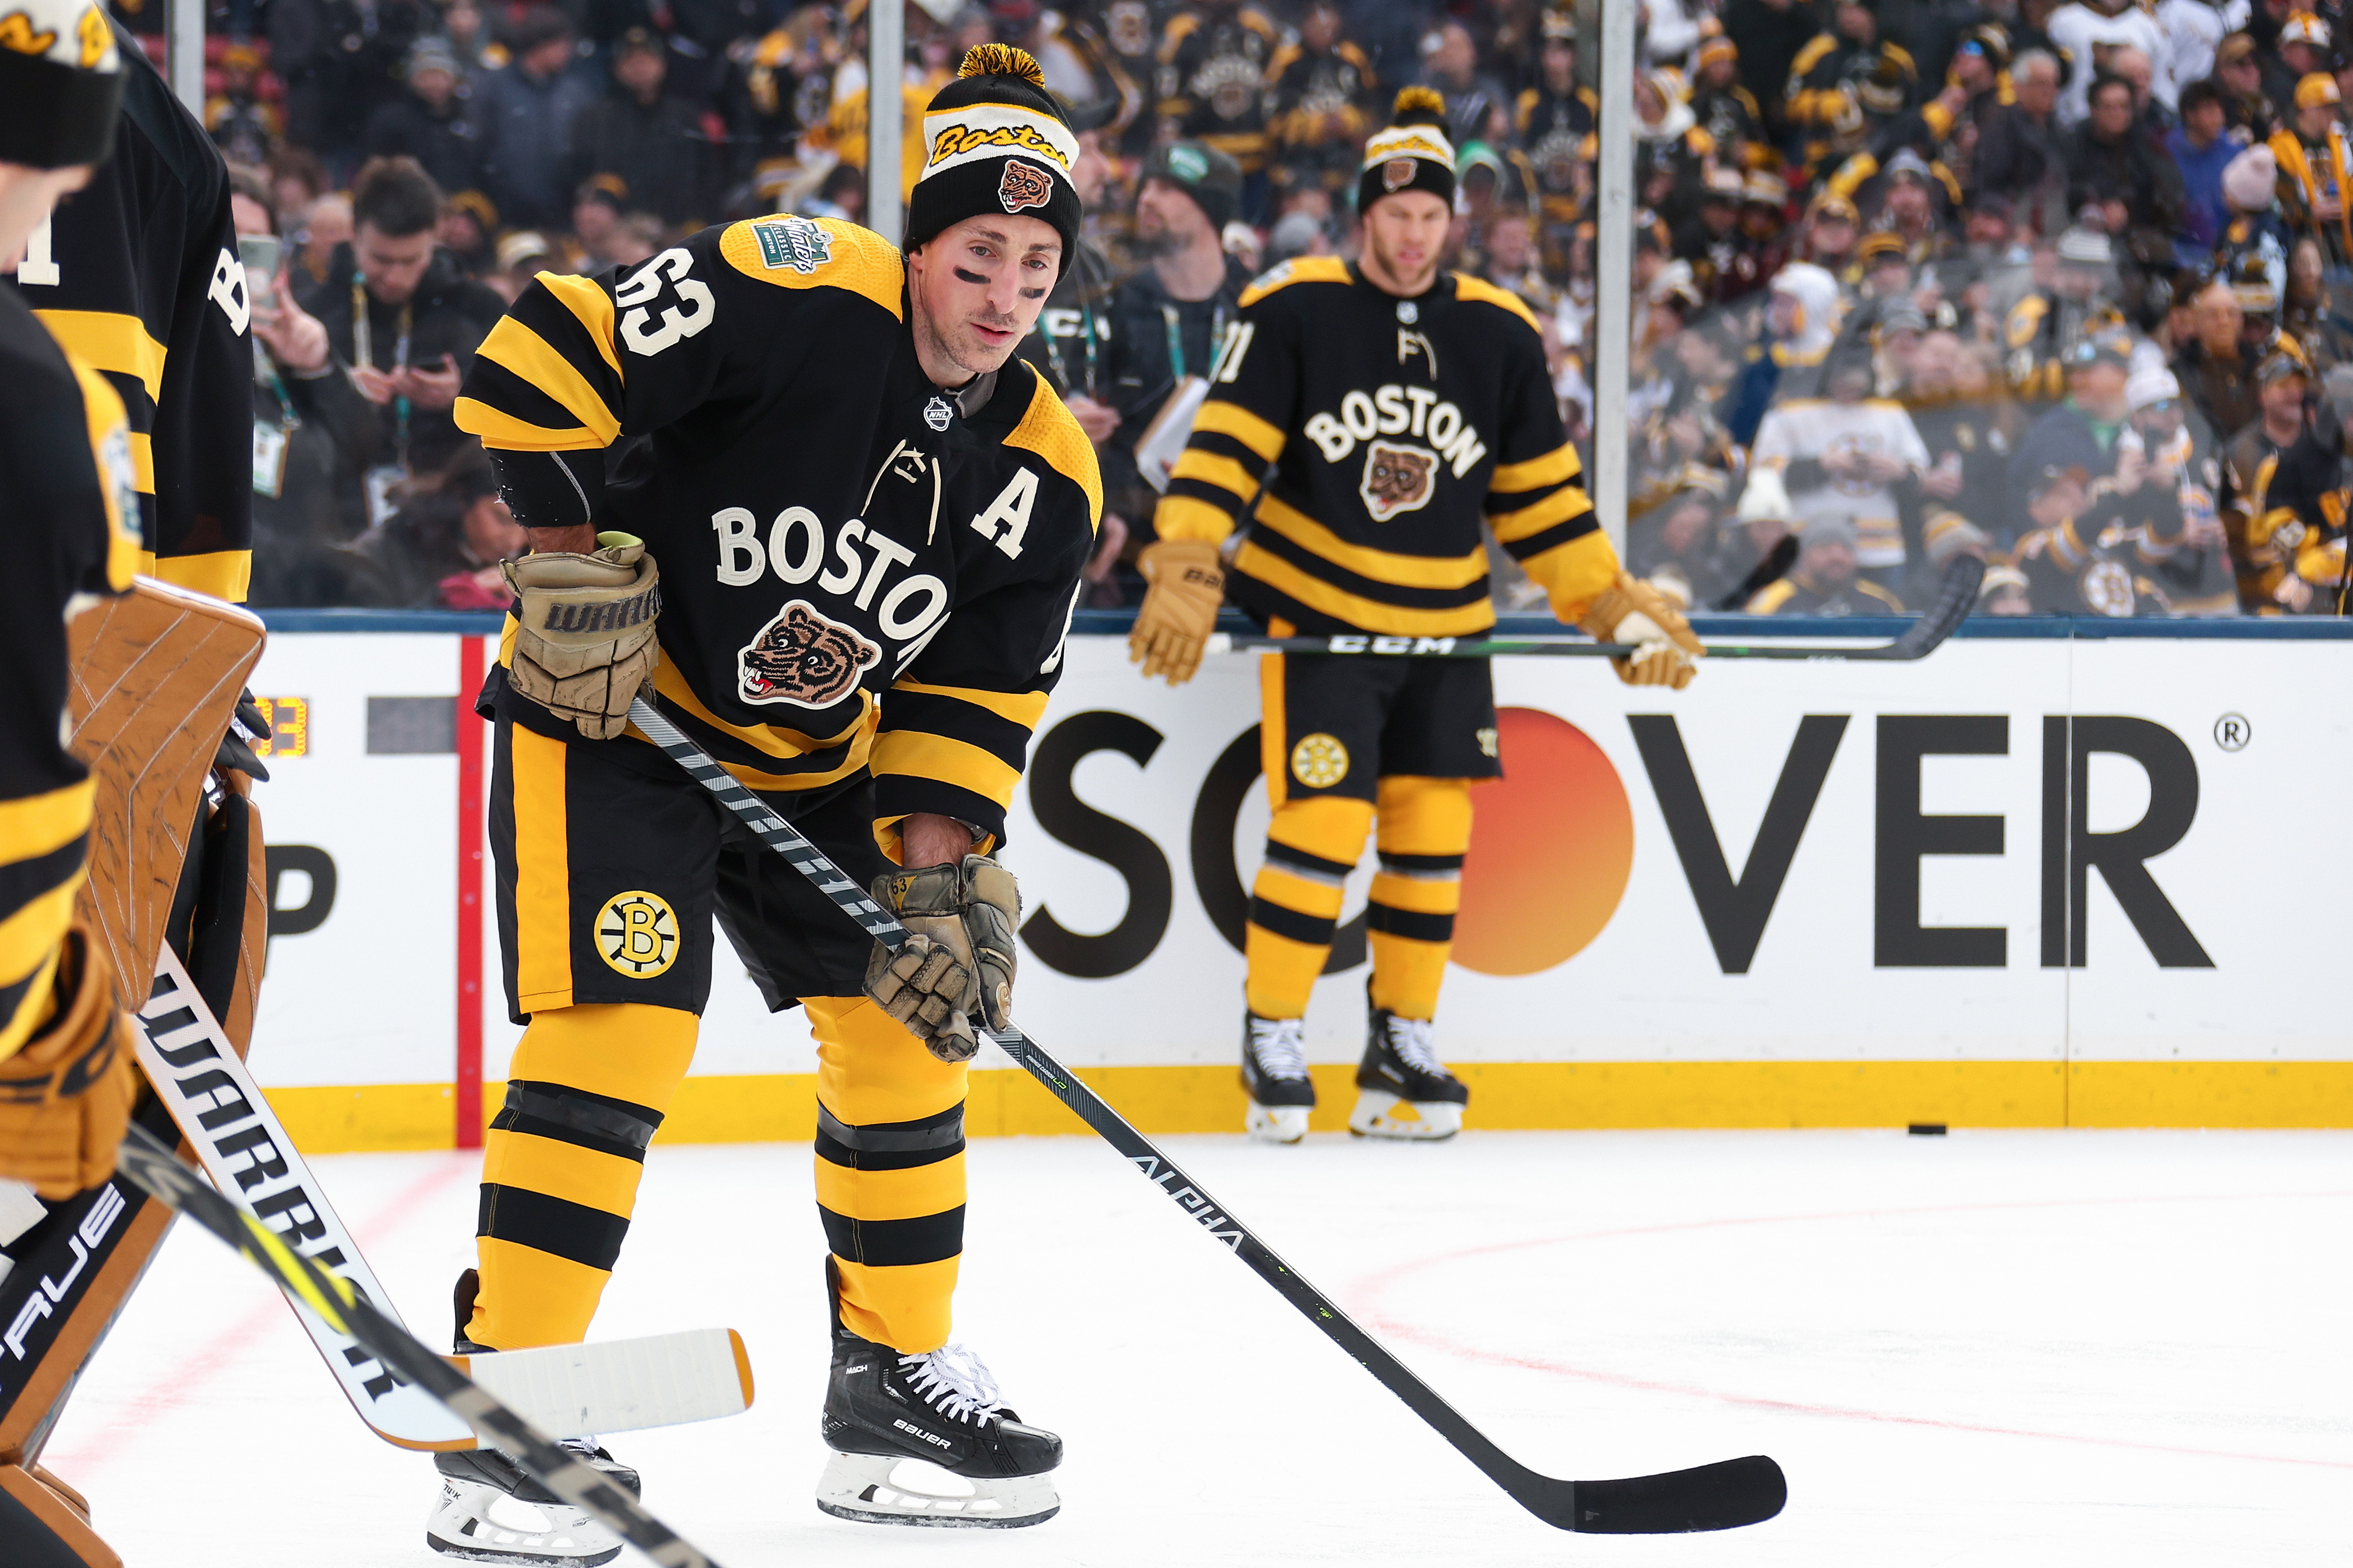 Bergeron, Crosby get national spotlight at NHL's Winter Classic